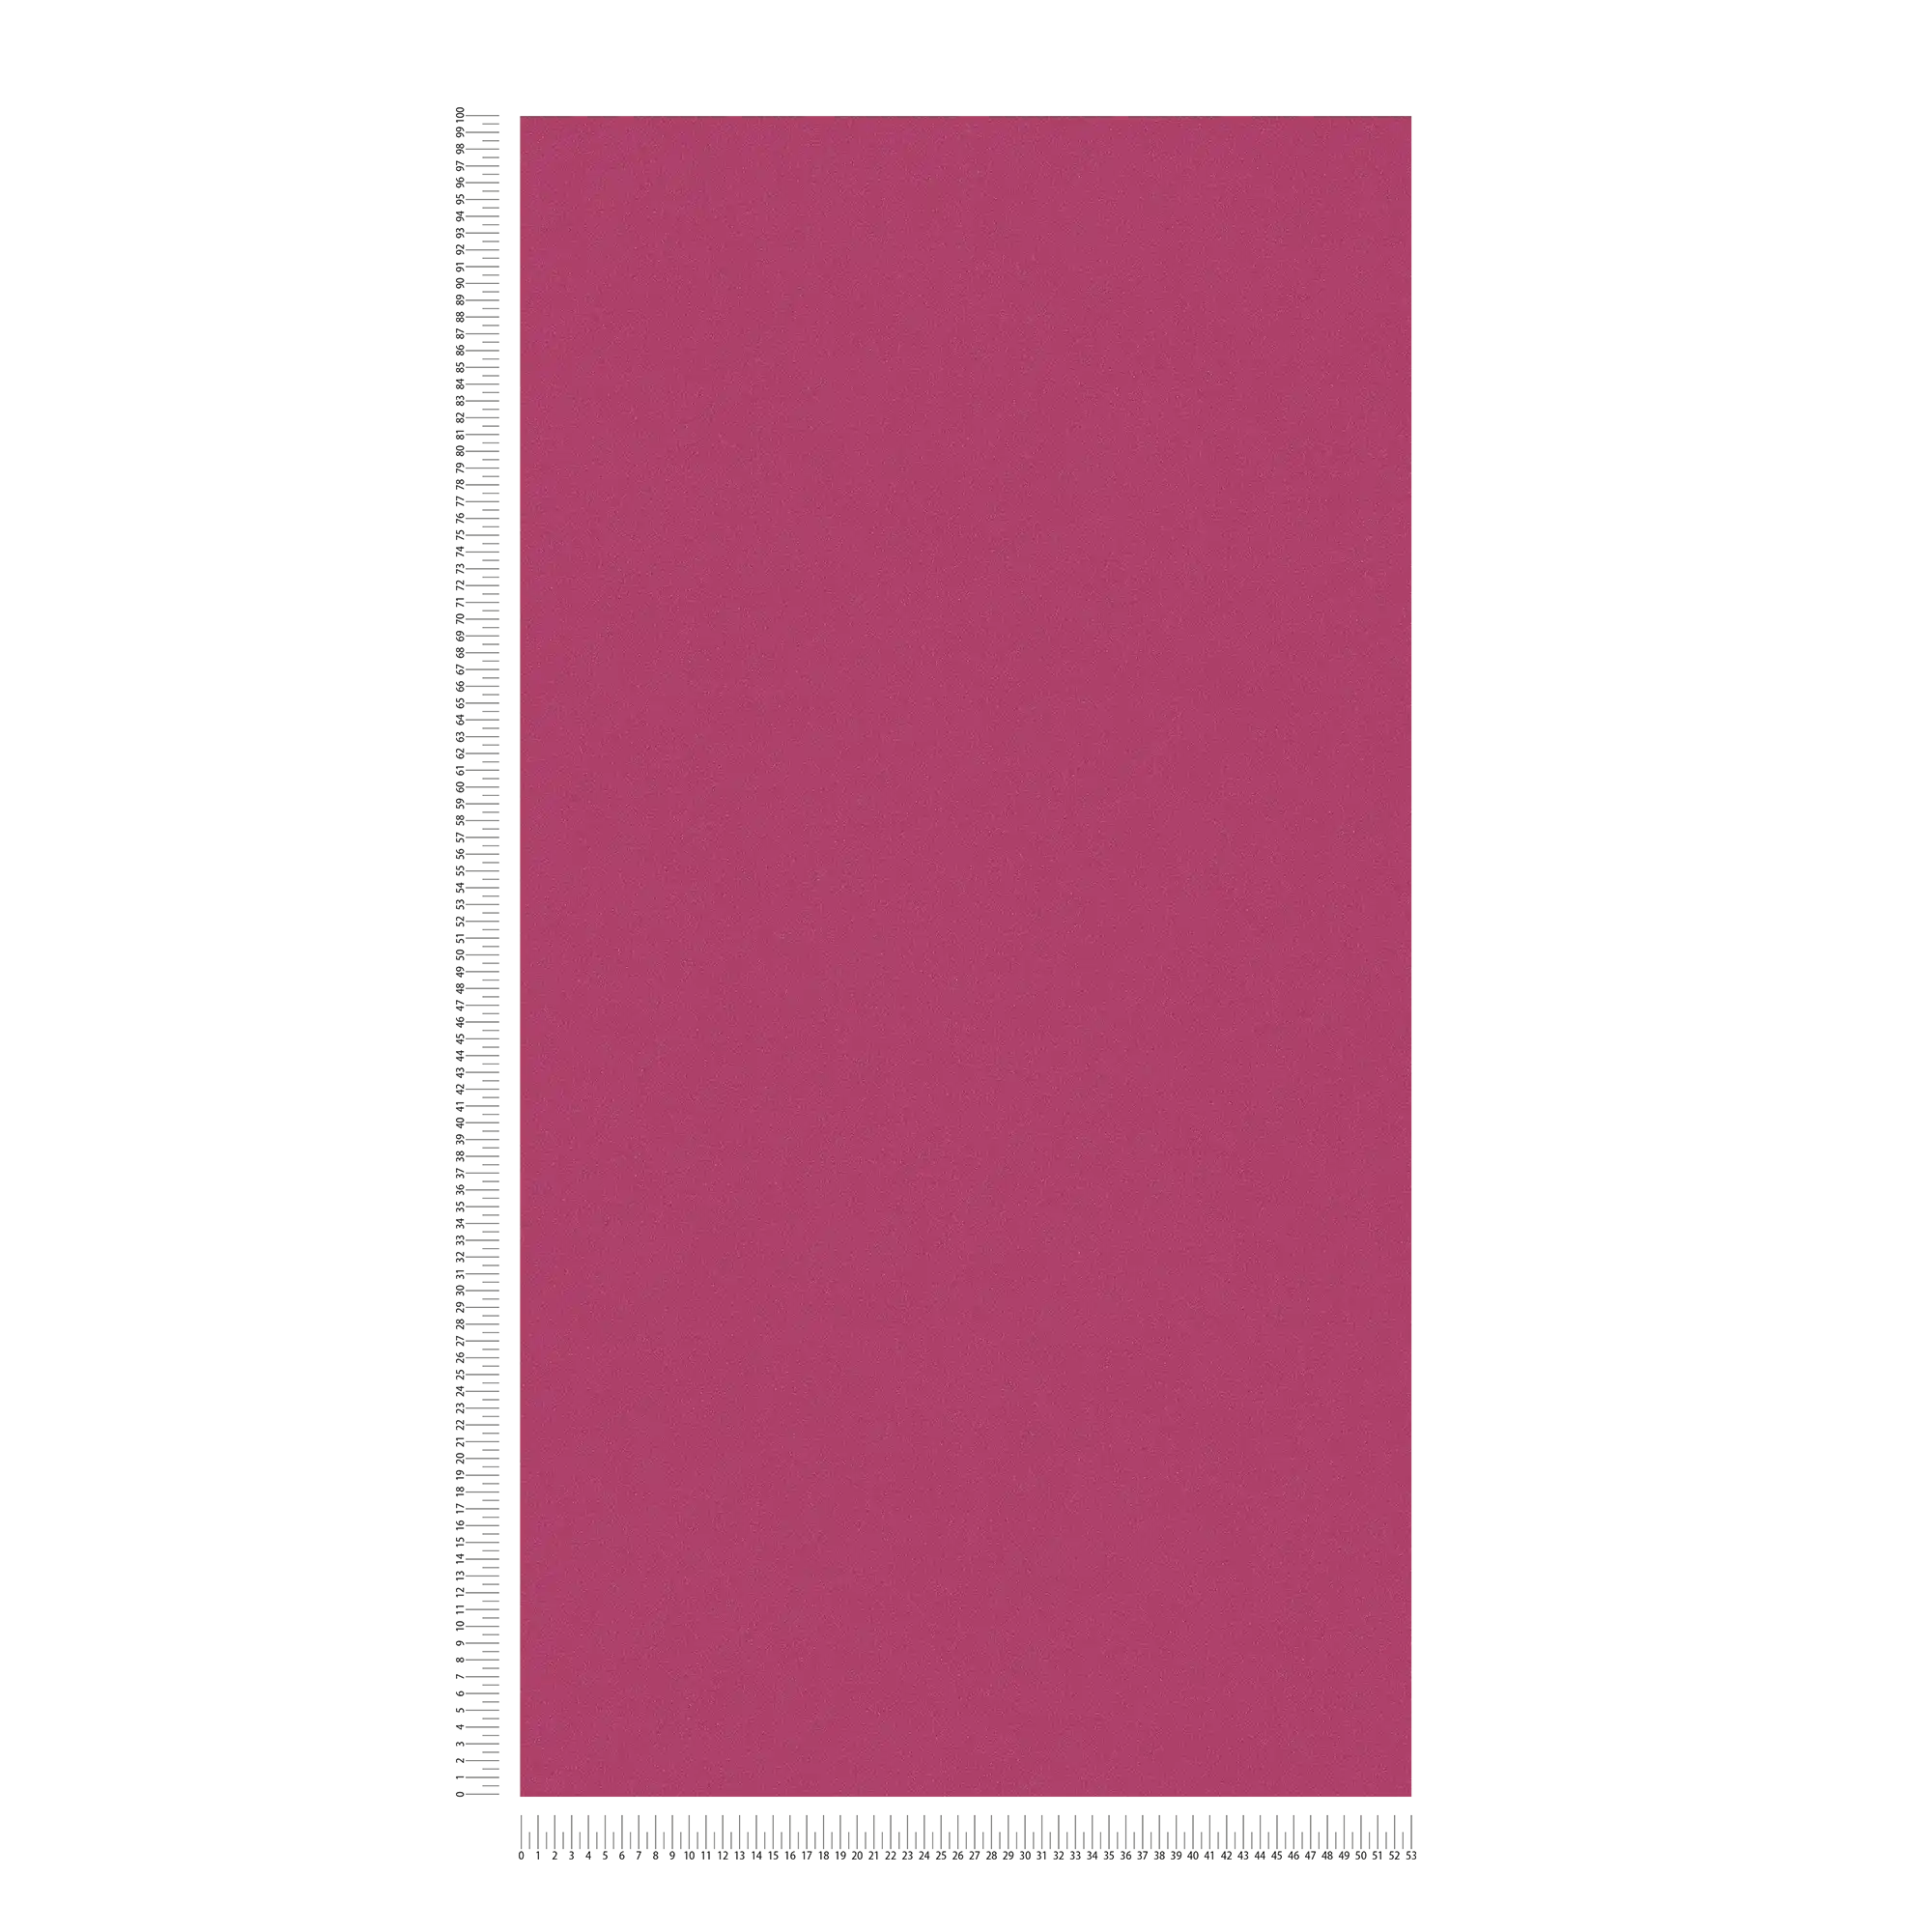             Plain wallpaper warm colour, textured - pink, red
        